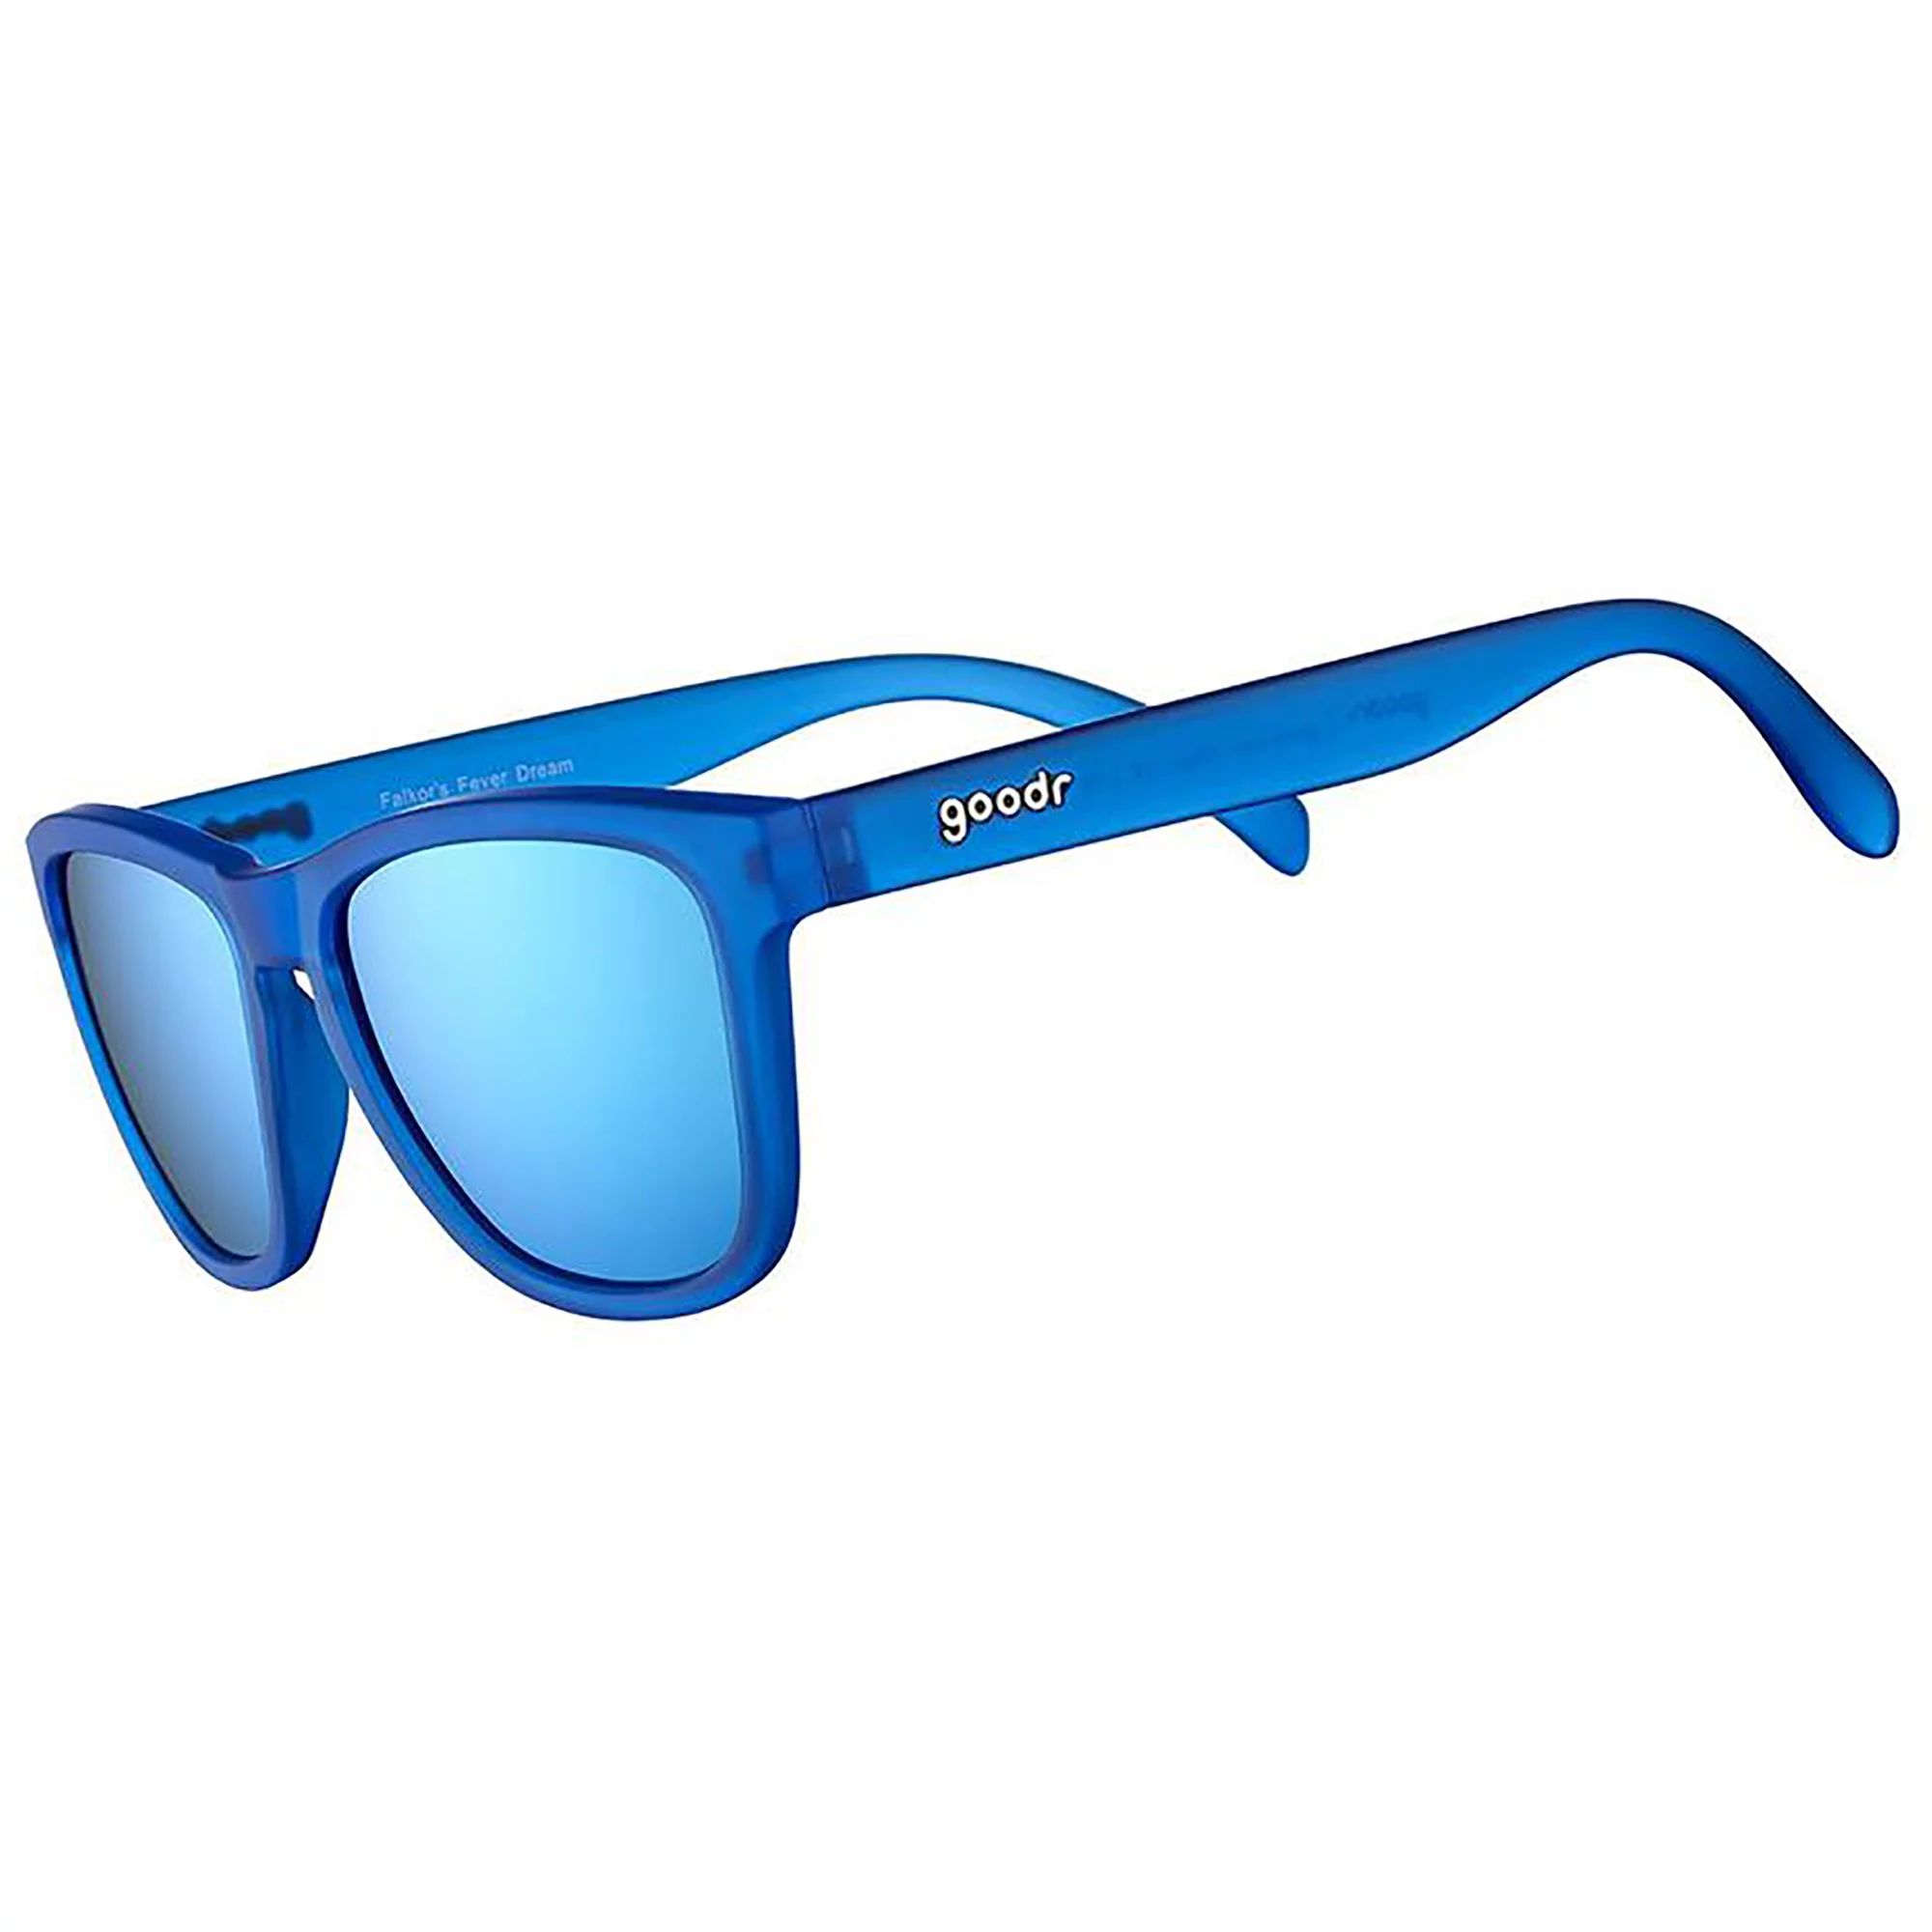 Goodr Falkor's Fever Dream Sunglasses, Men's, Blue | Public Lands